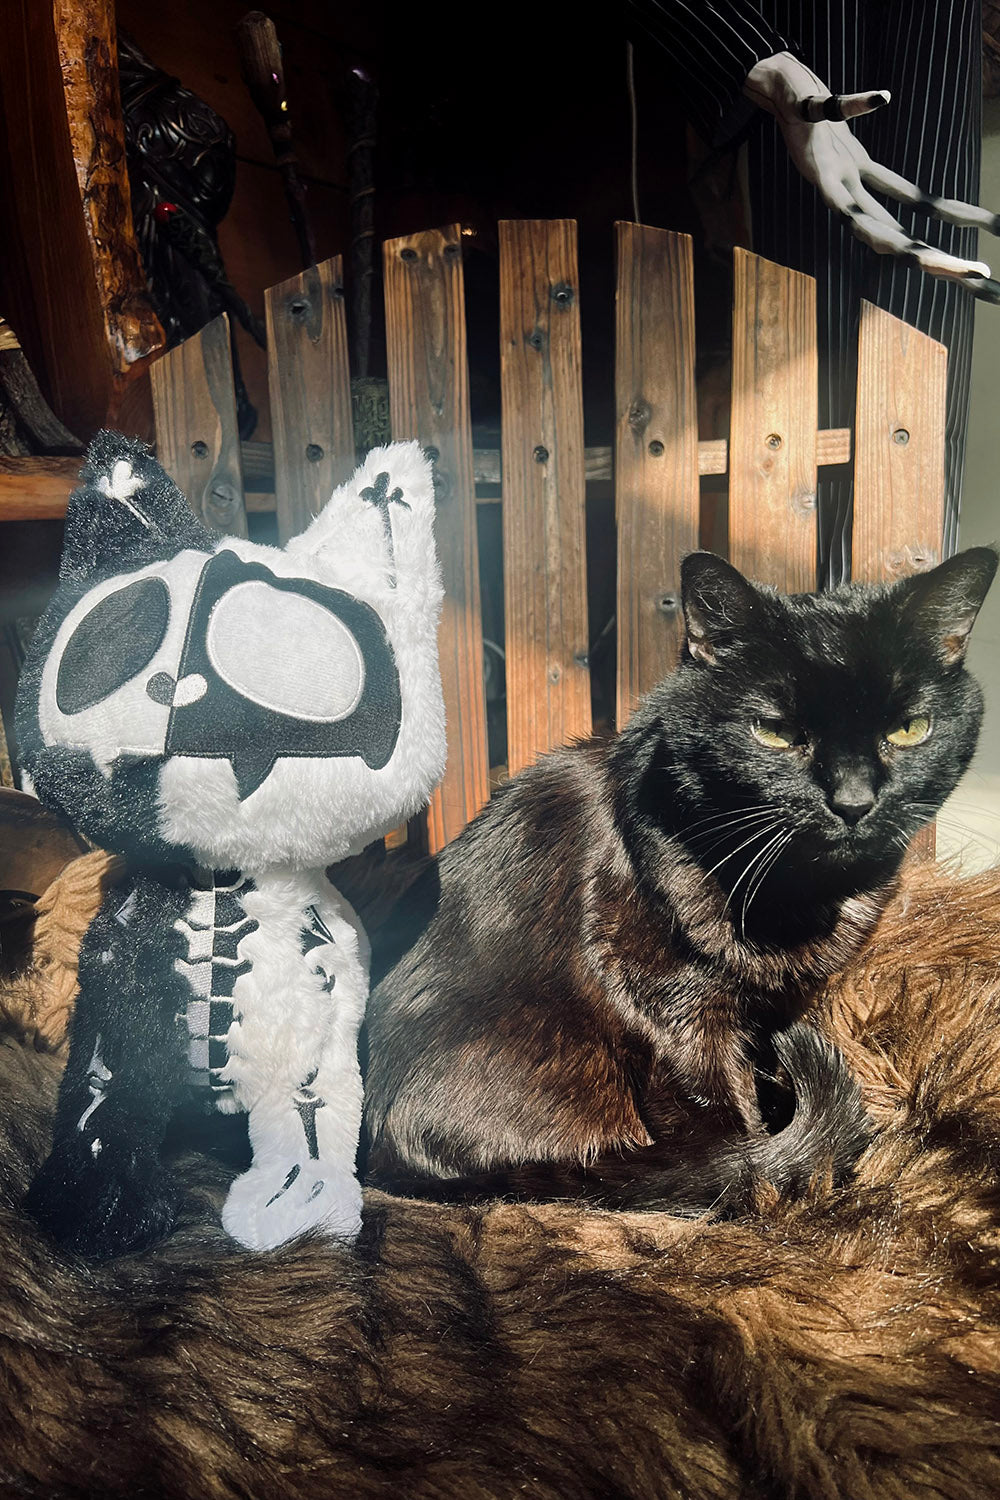 gothic black and white skeleton cat plush toy